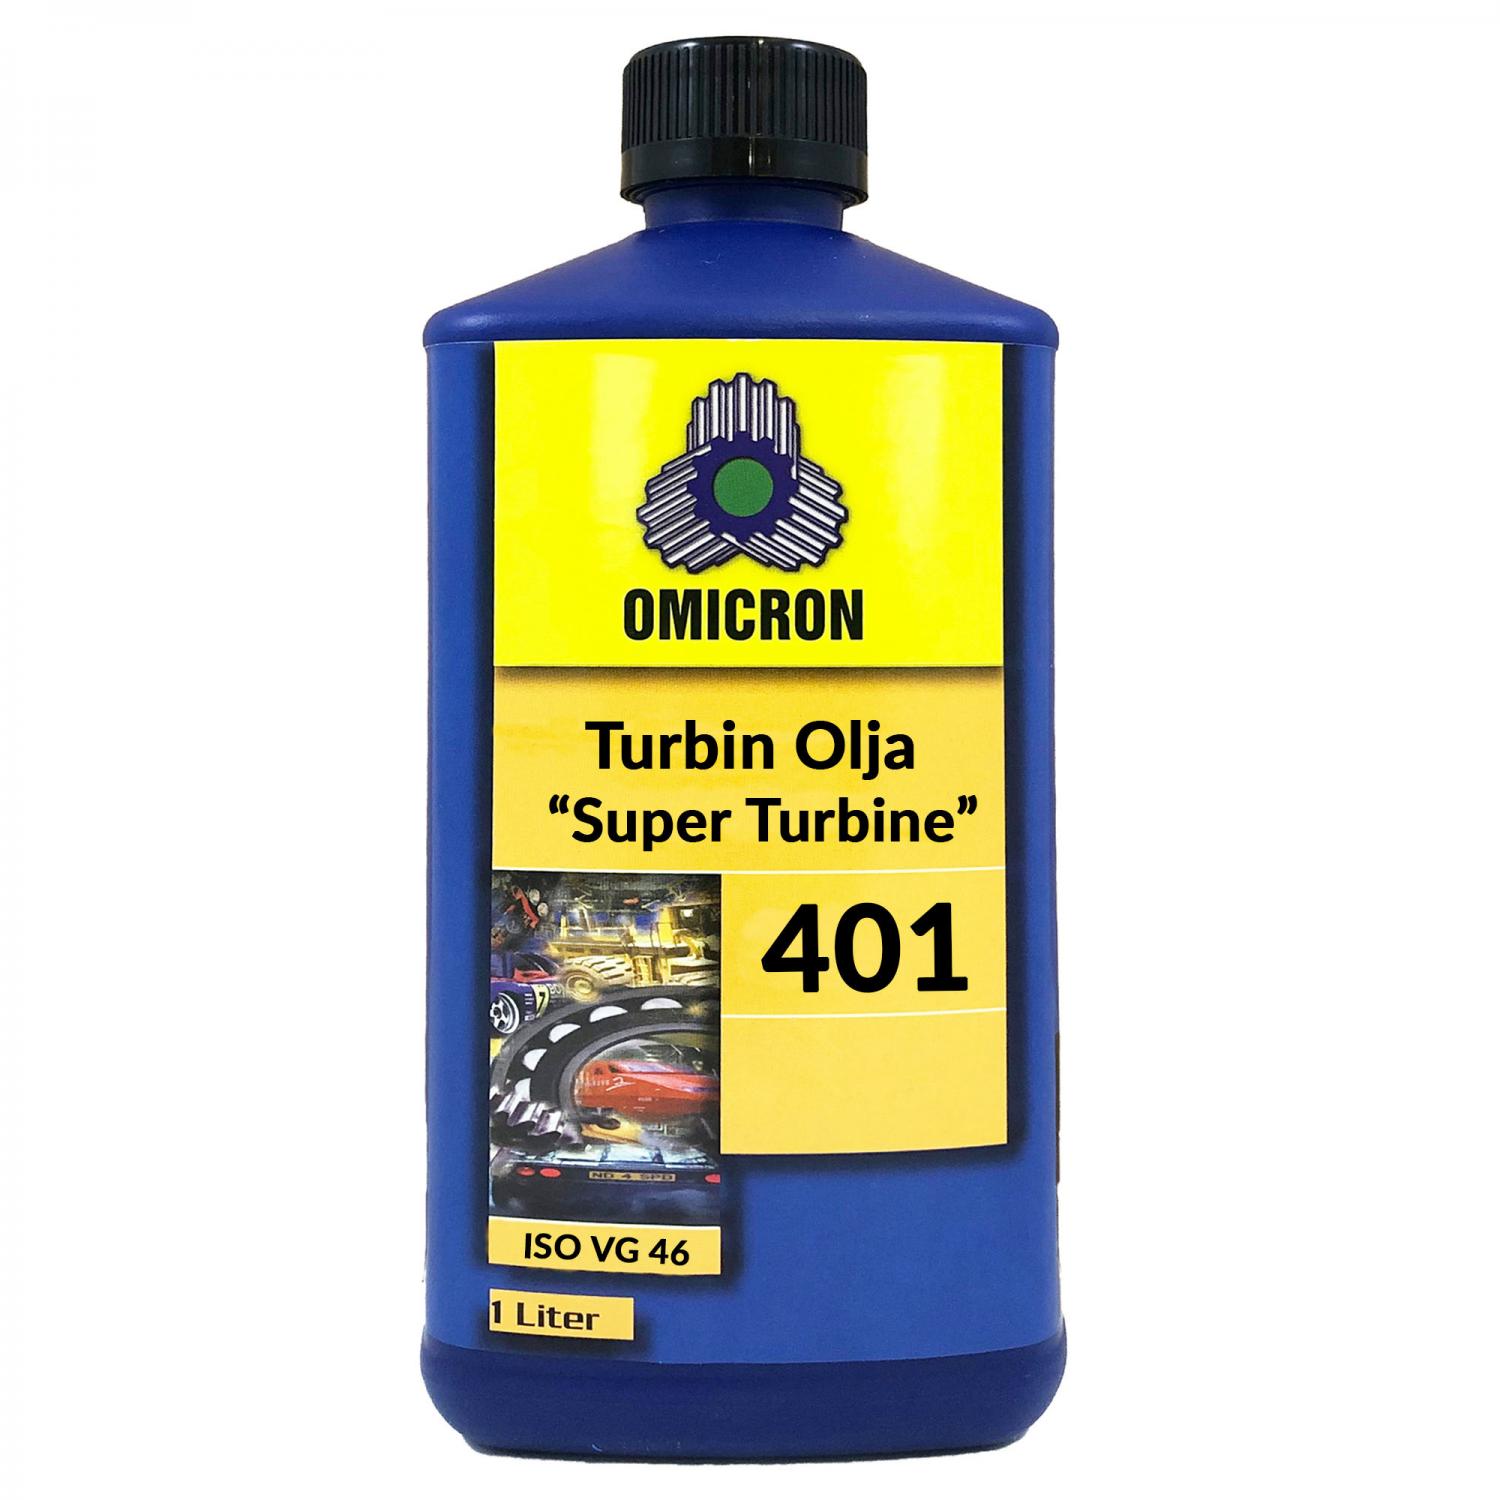 Omicron 401 ISO VG 46 Turbin Olja 1L